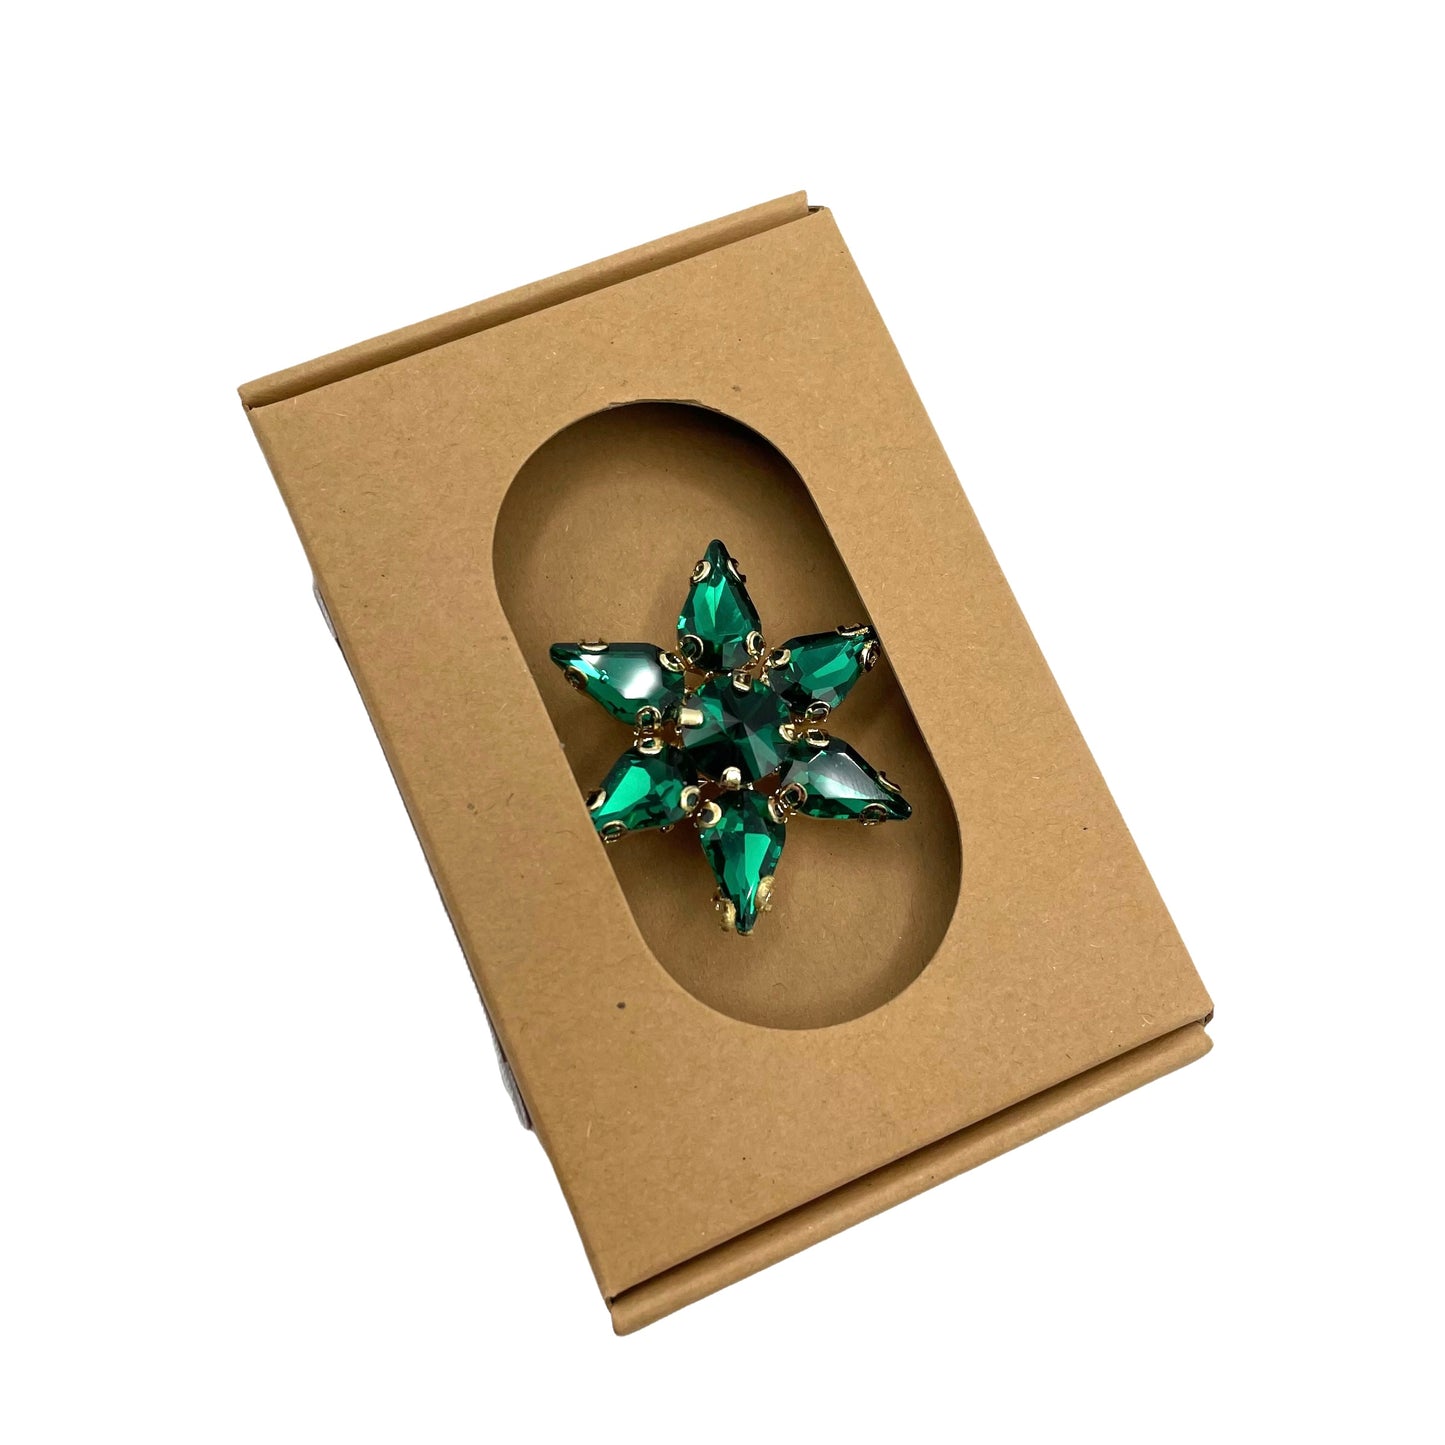 Emerald green sparkle star pin